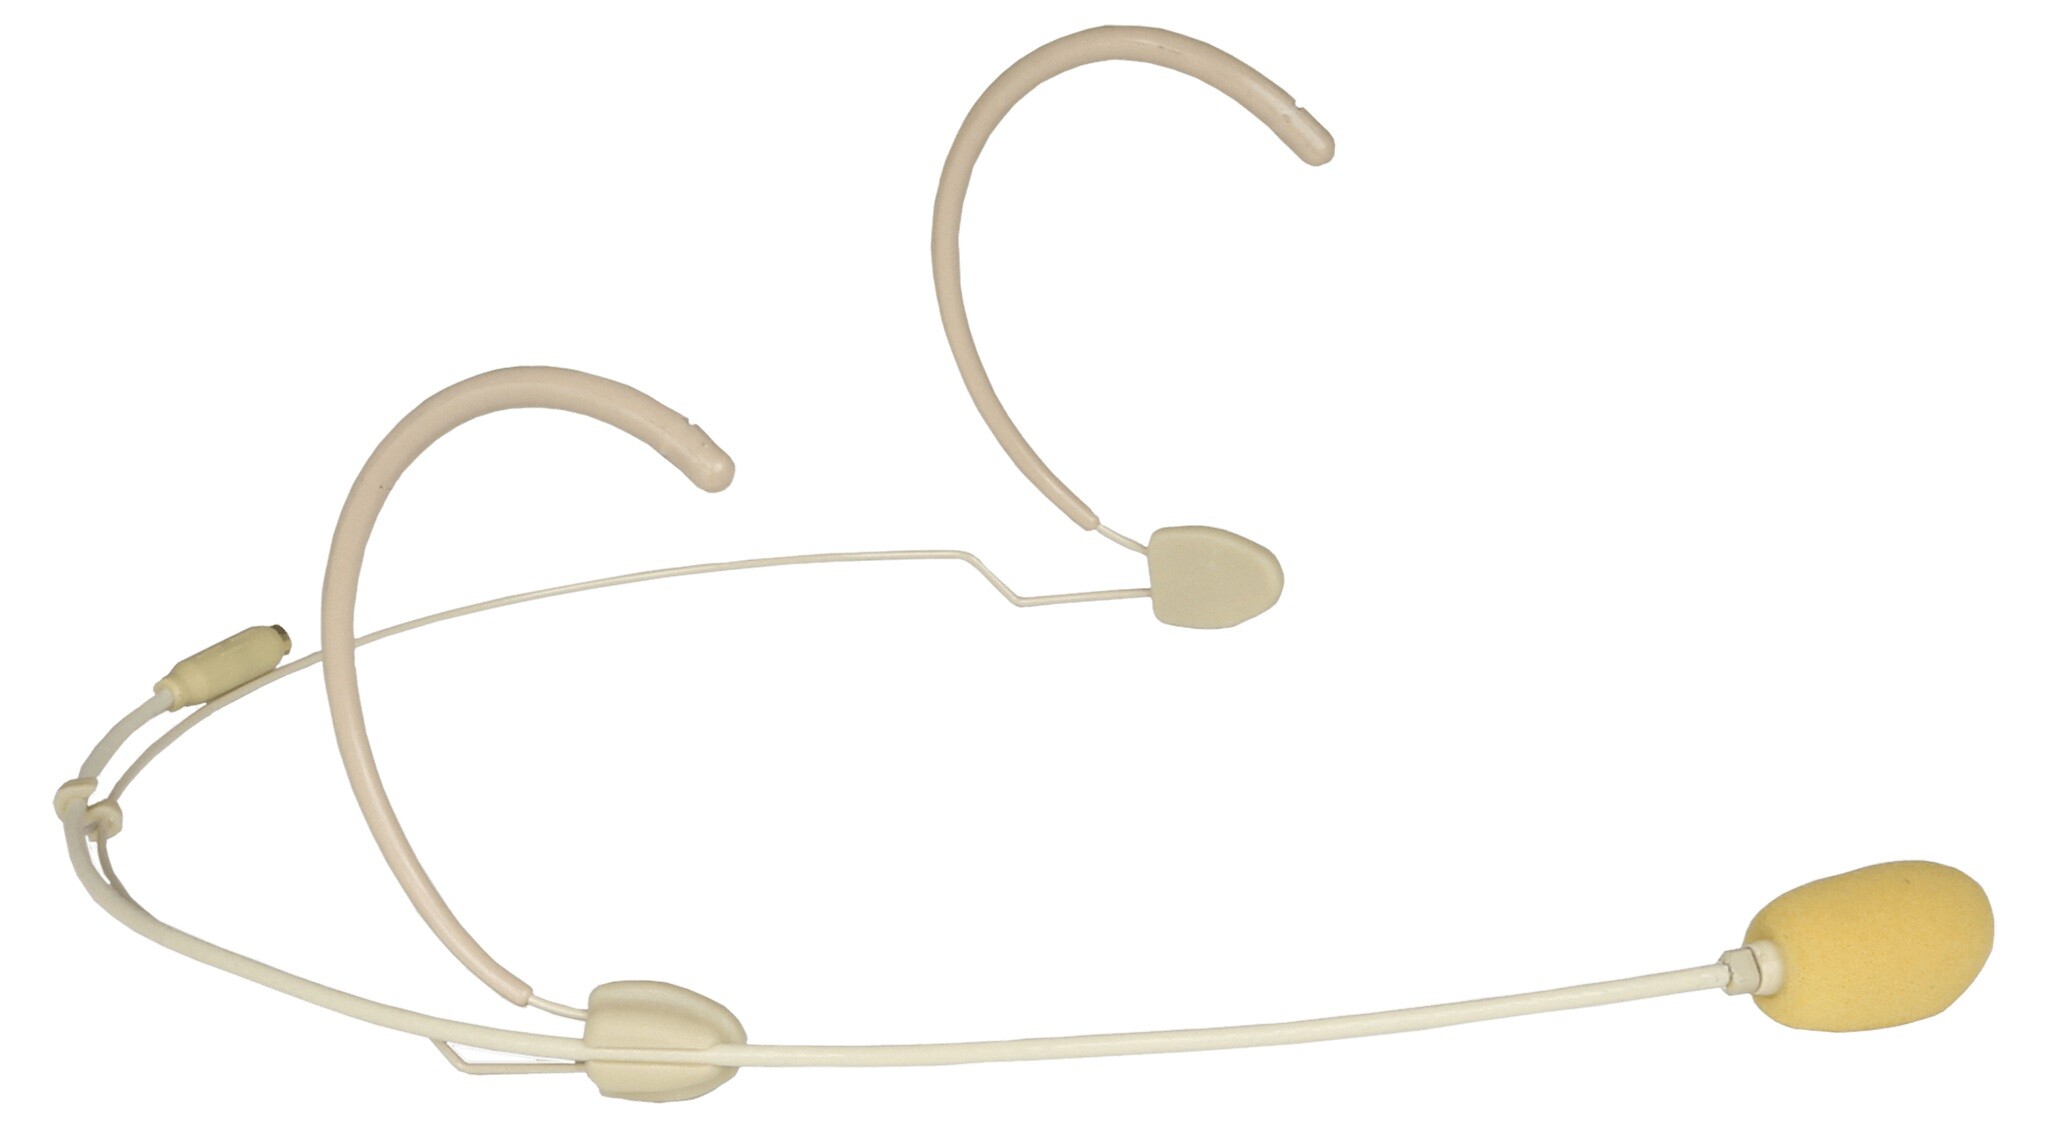 Audac-CMX826-S-Double-Ear-Headset-Mikrofon-Niere-mit-Windschutz-4xAnschluss-Adapter-1-2m-Kabel-beige